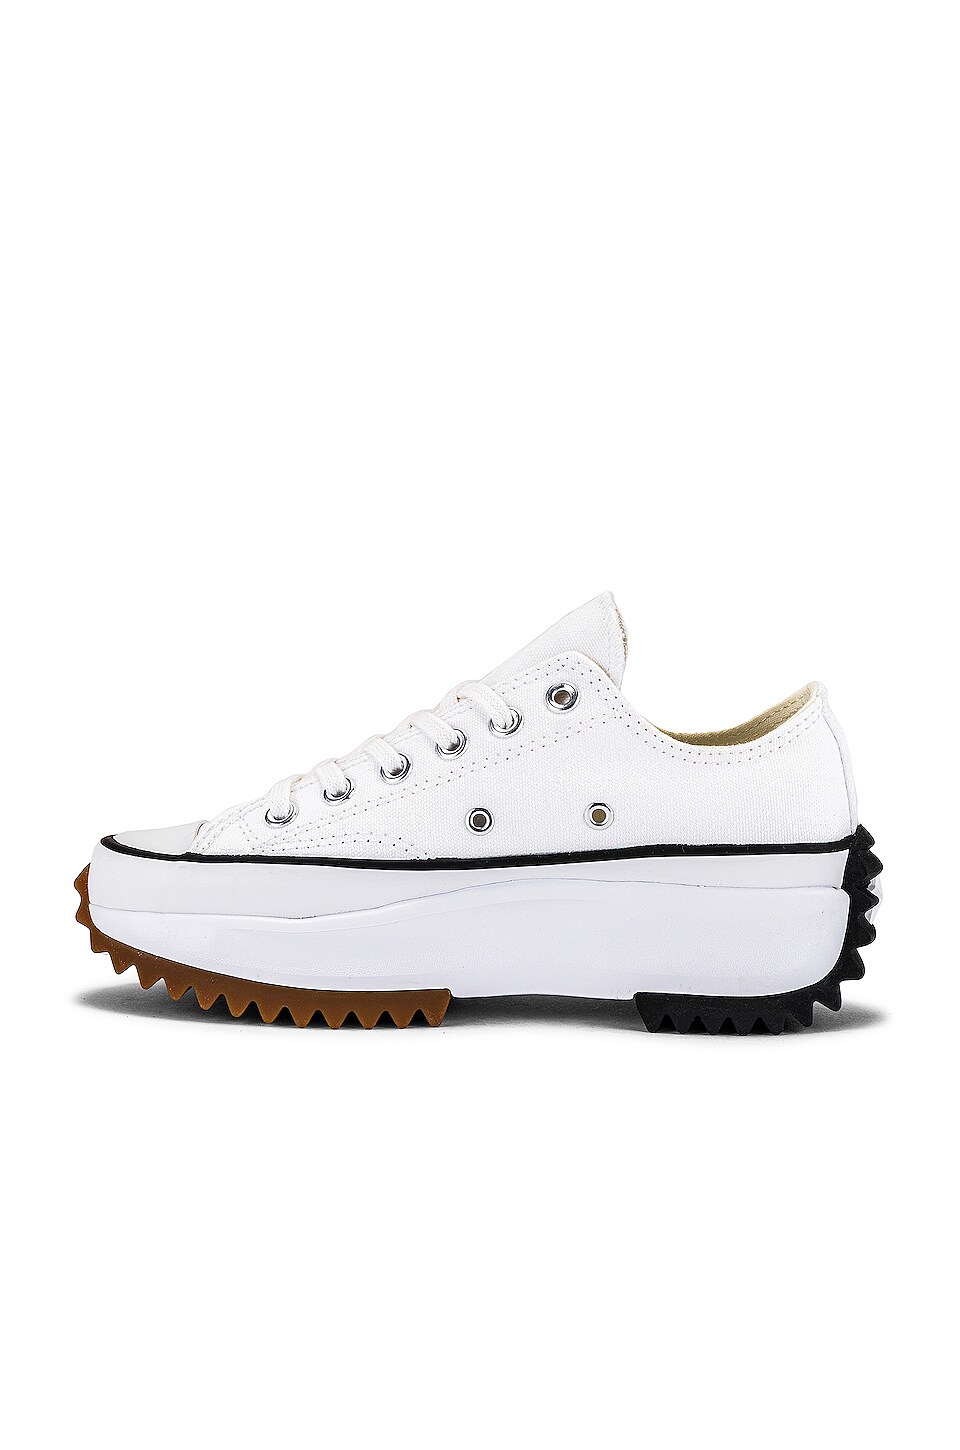 Converse Run Star Hike Platform Sneaker in White, Black & Gum | REVOLVE